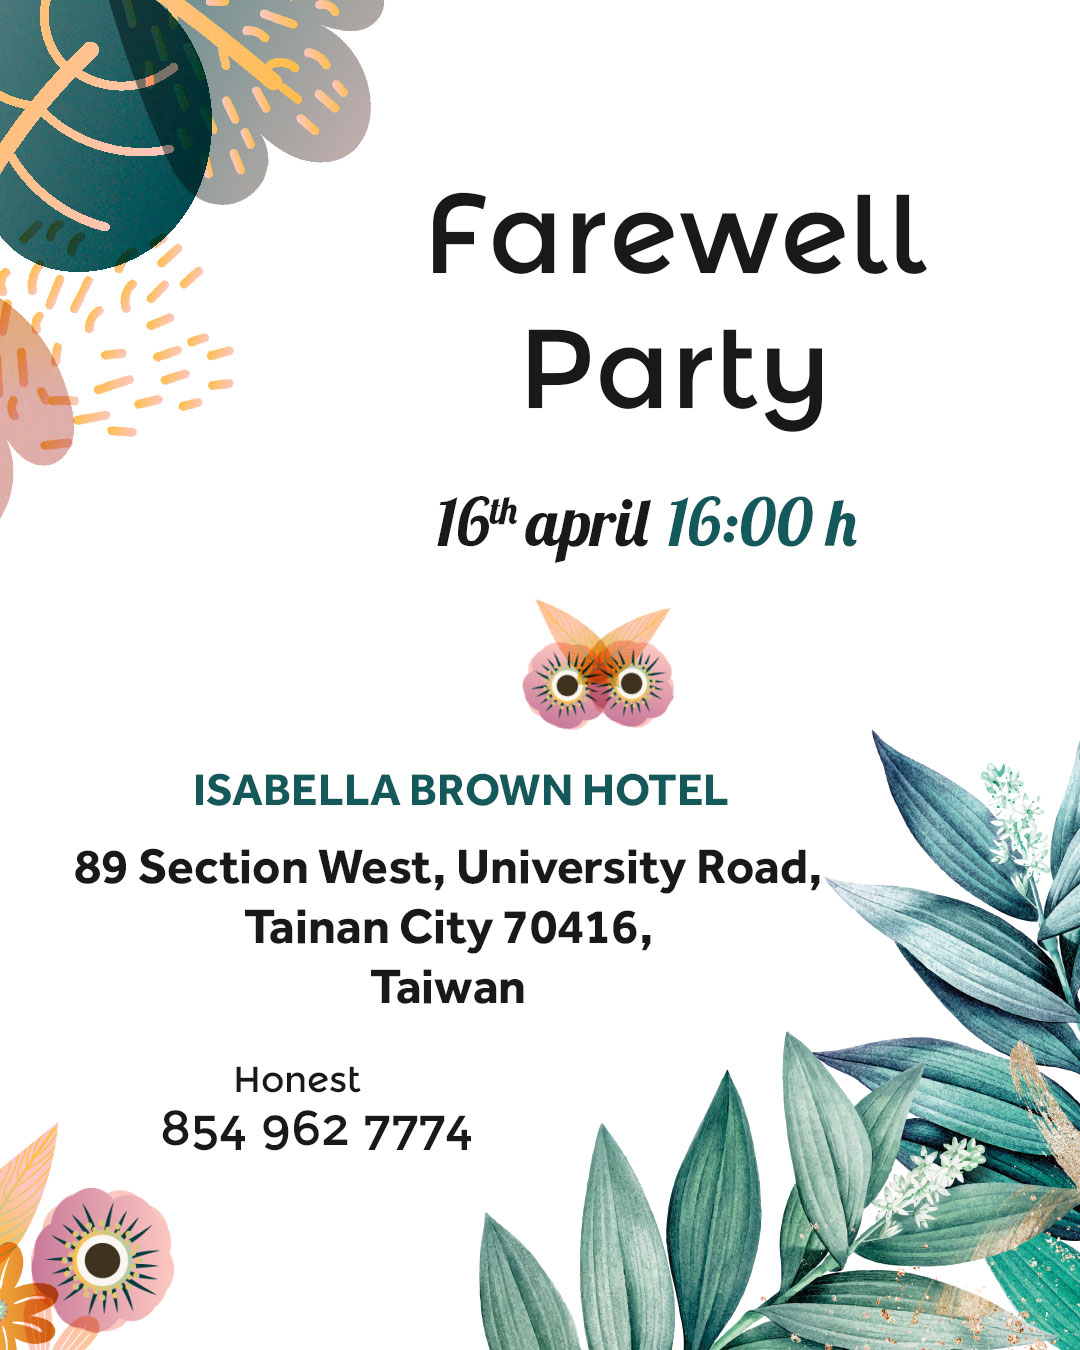 Farewell Party Invitation Card Free